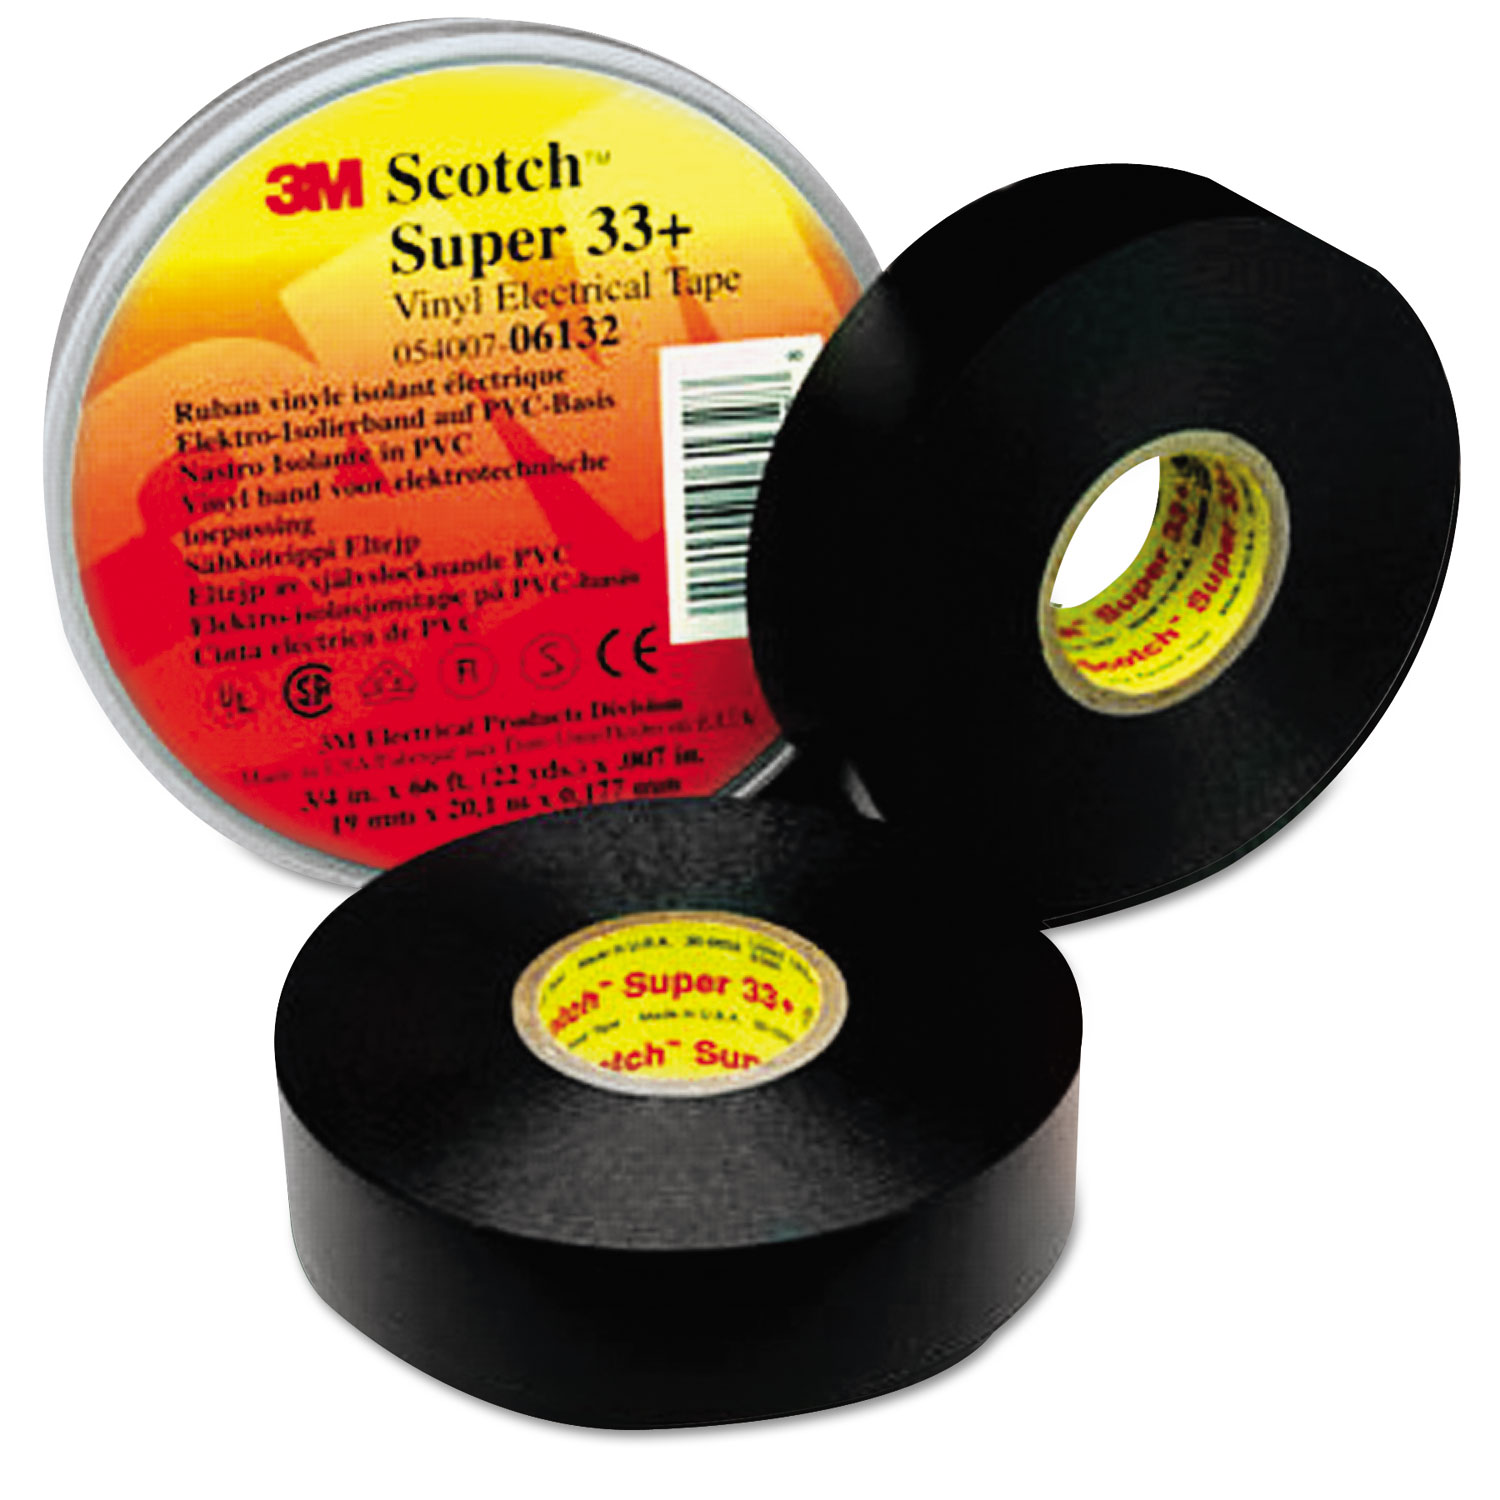  3M 80610833818 Scotch 33+ Super Vinyl Electrical Tape, 0.75 x 44 ft, Black (MMM10075) 